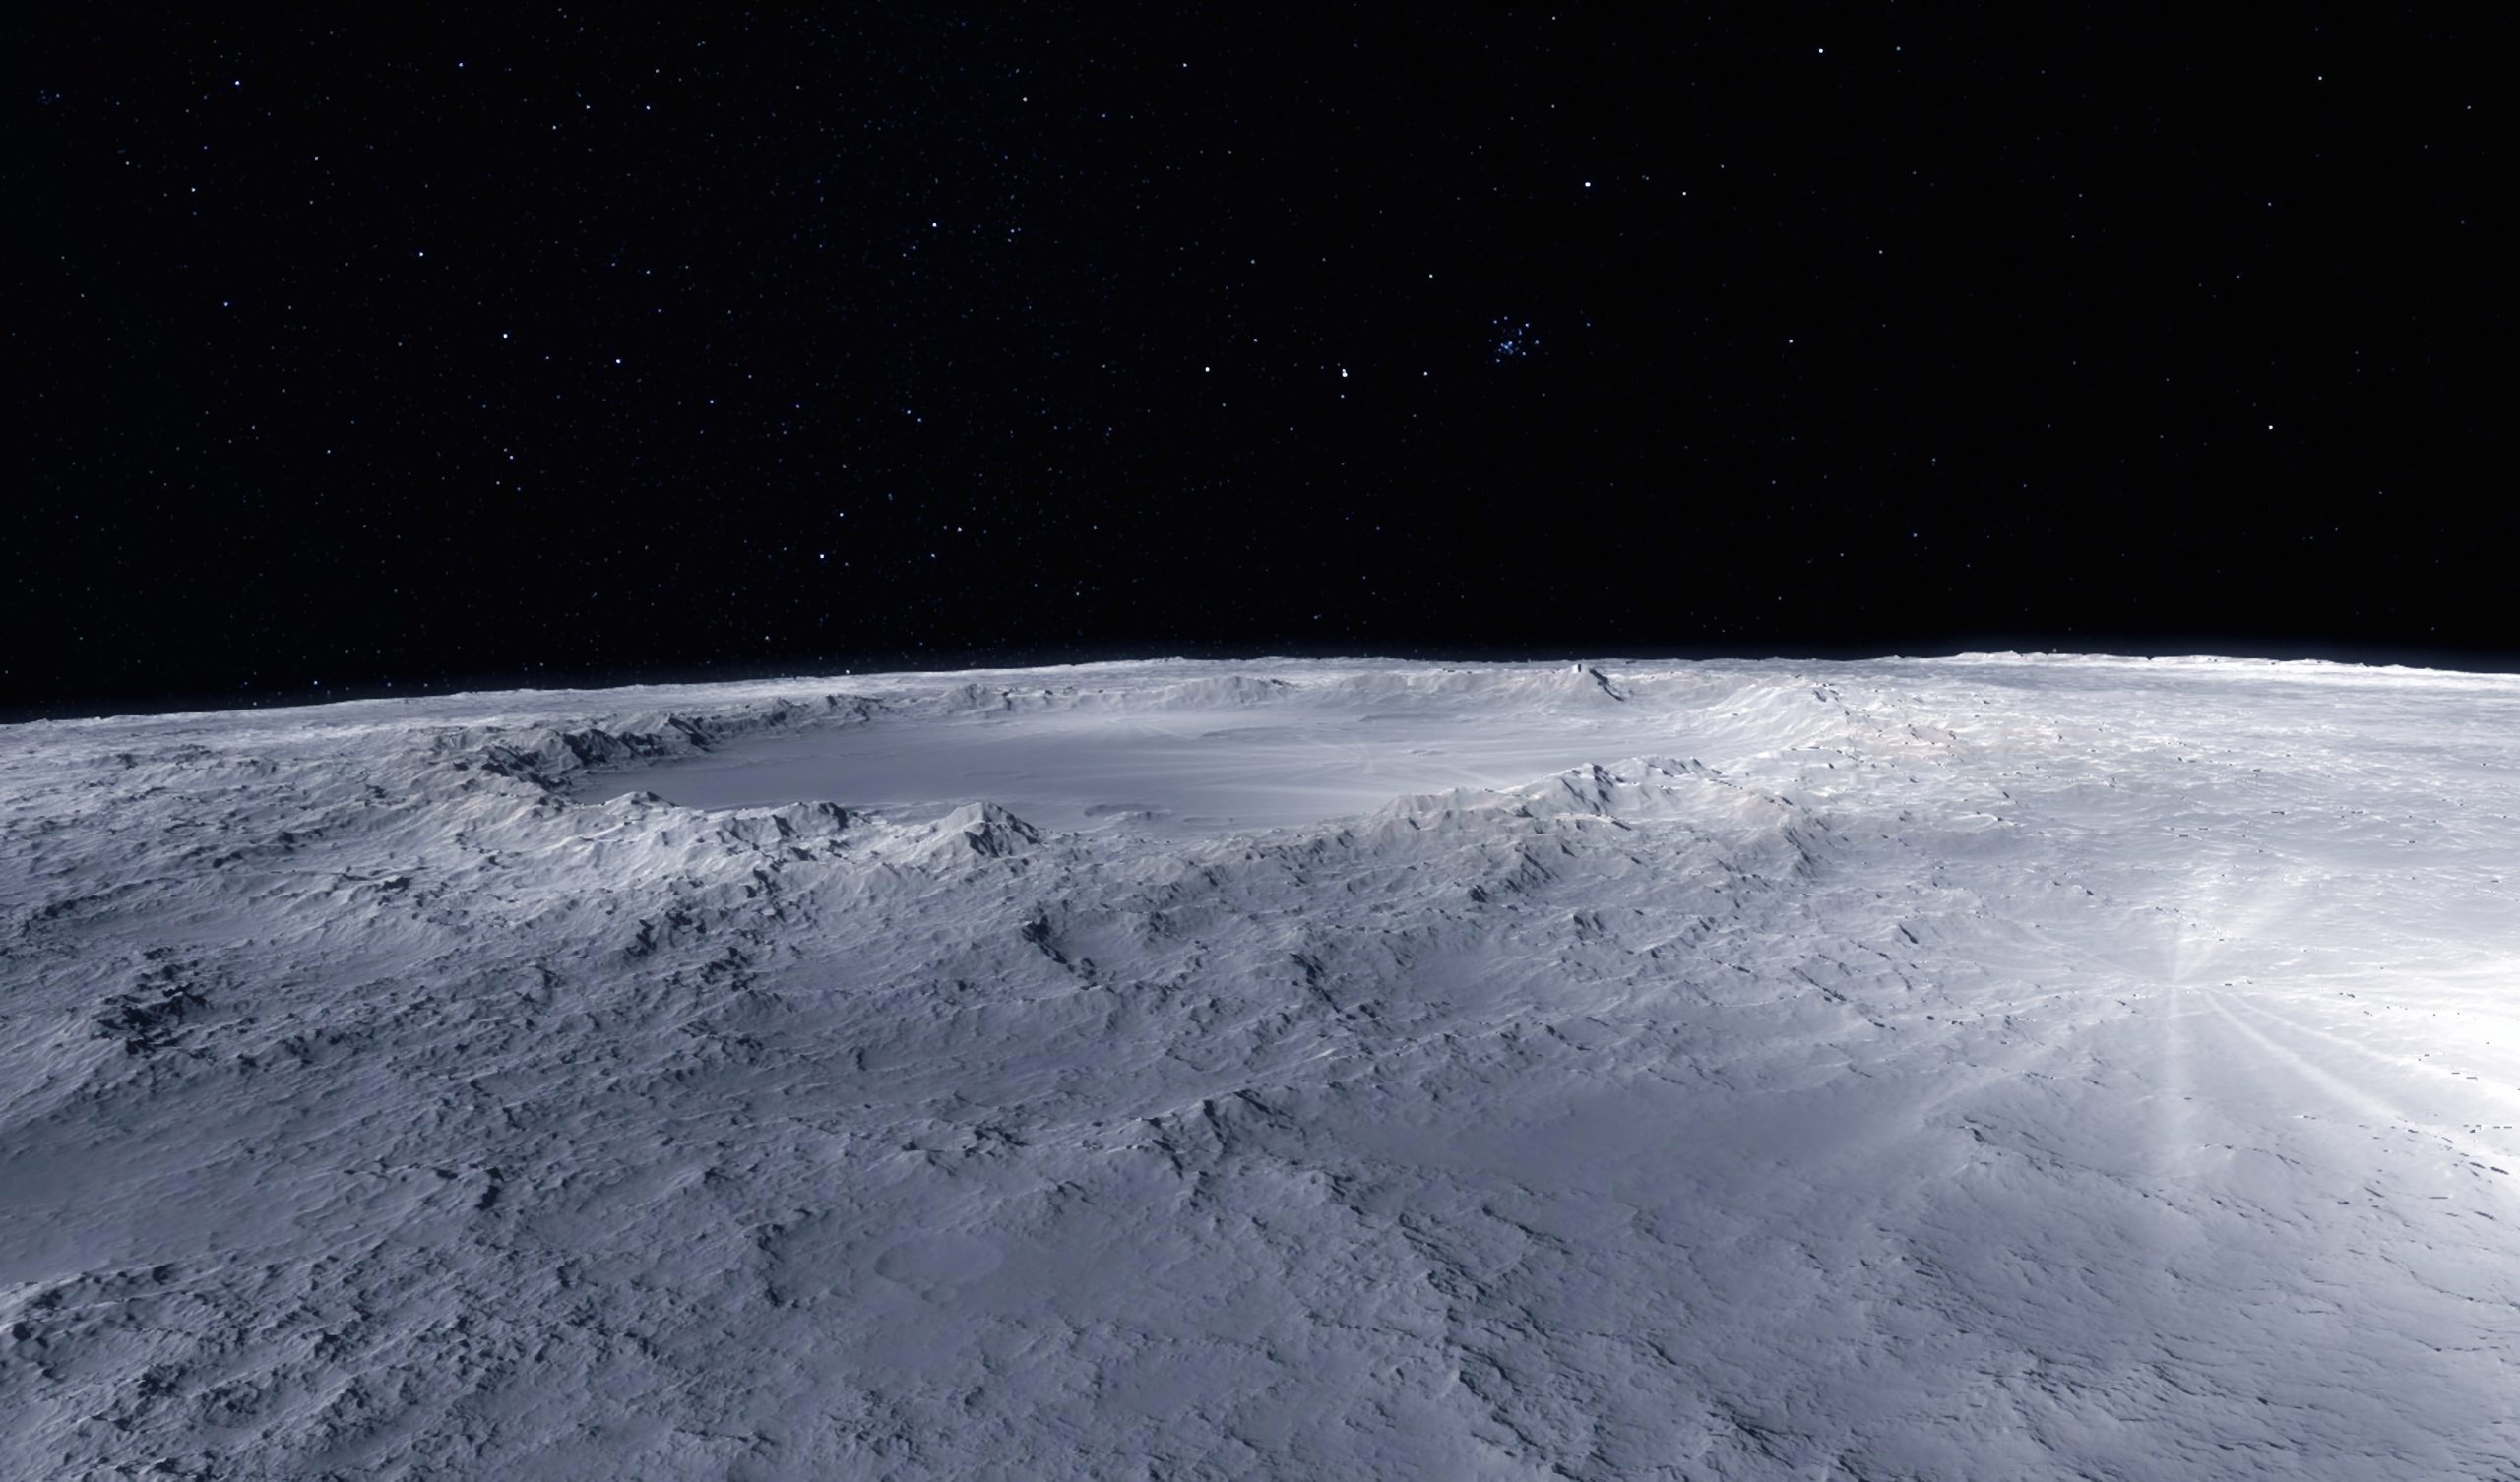 An illustration of the Lunar surface. Depositphotos.